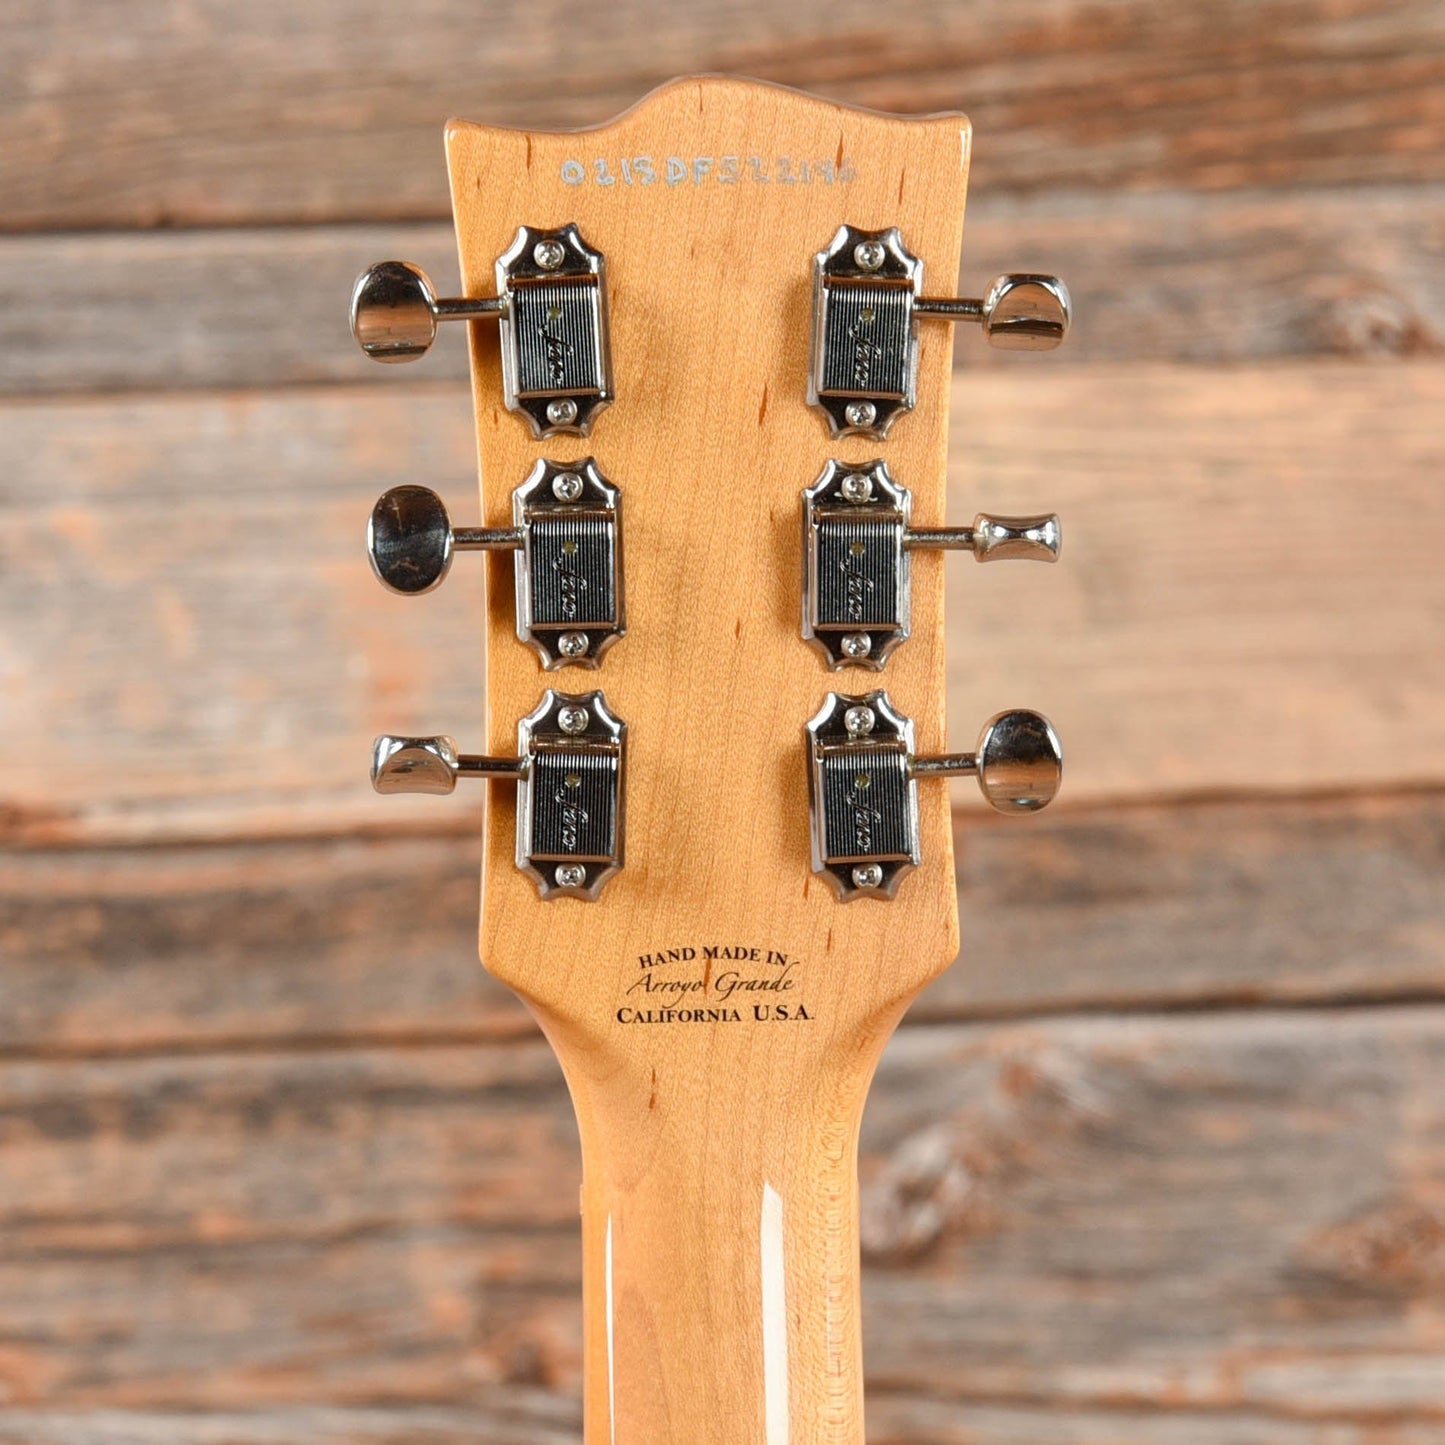 Fano Alt de Facto SP6 Lake Placid Blue 2015 Electric Guitars / Solid Body